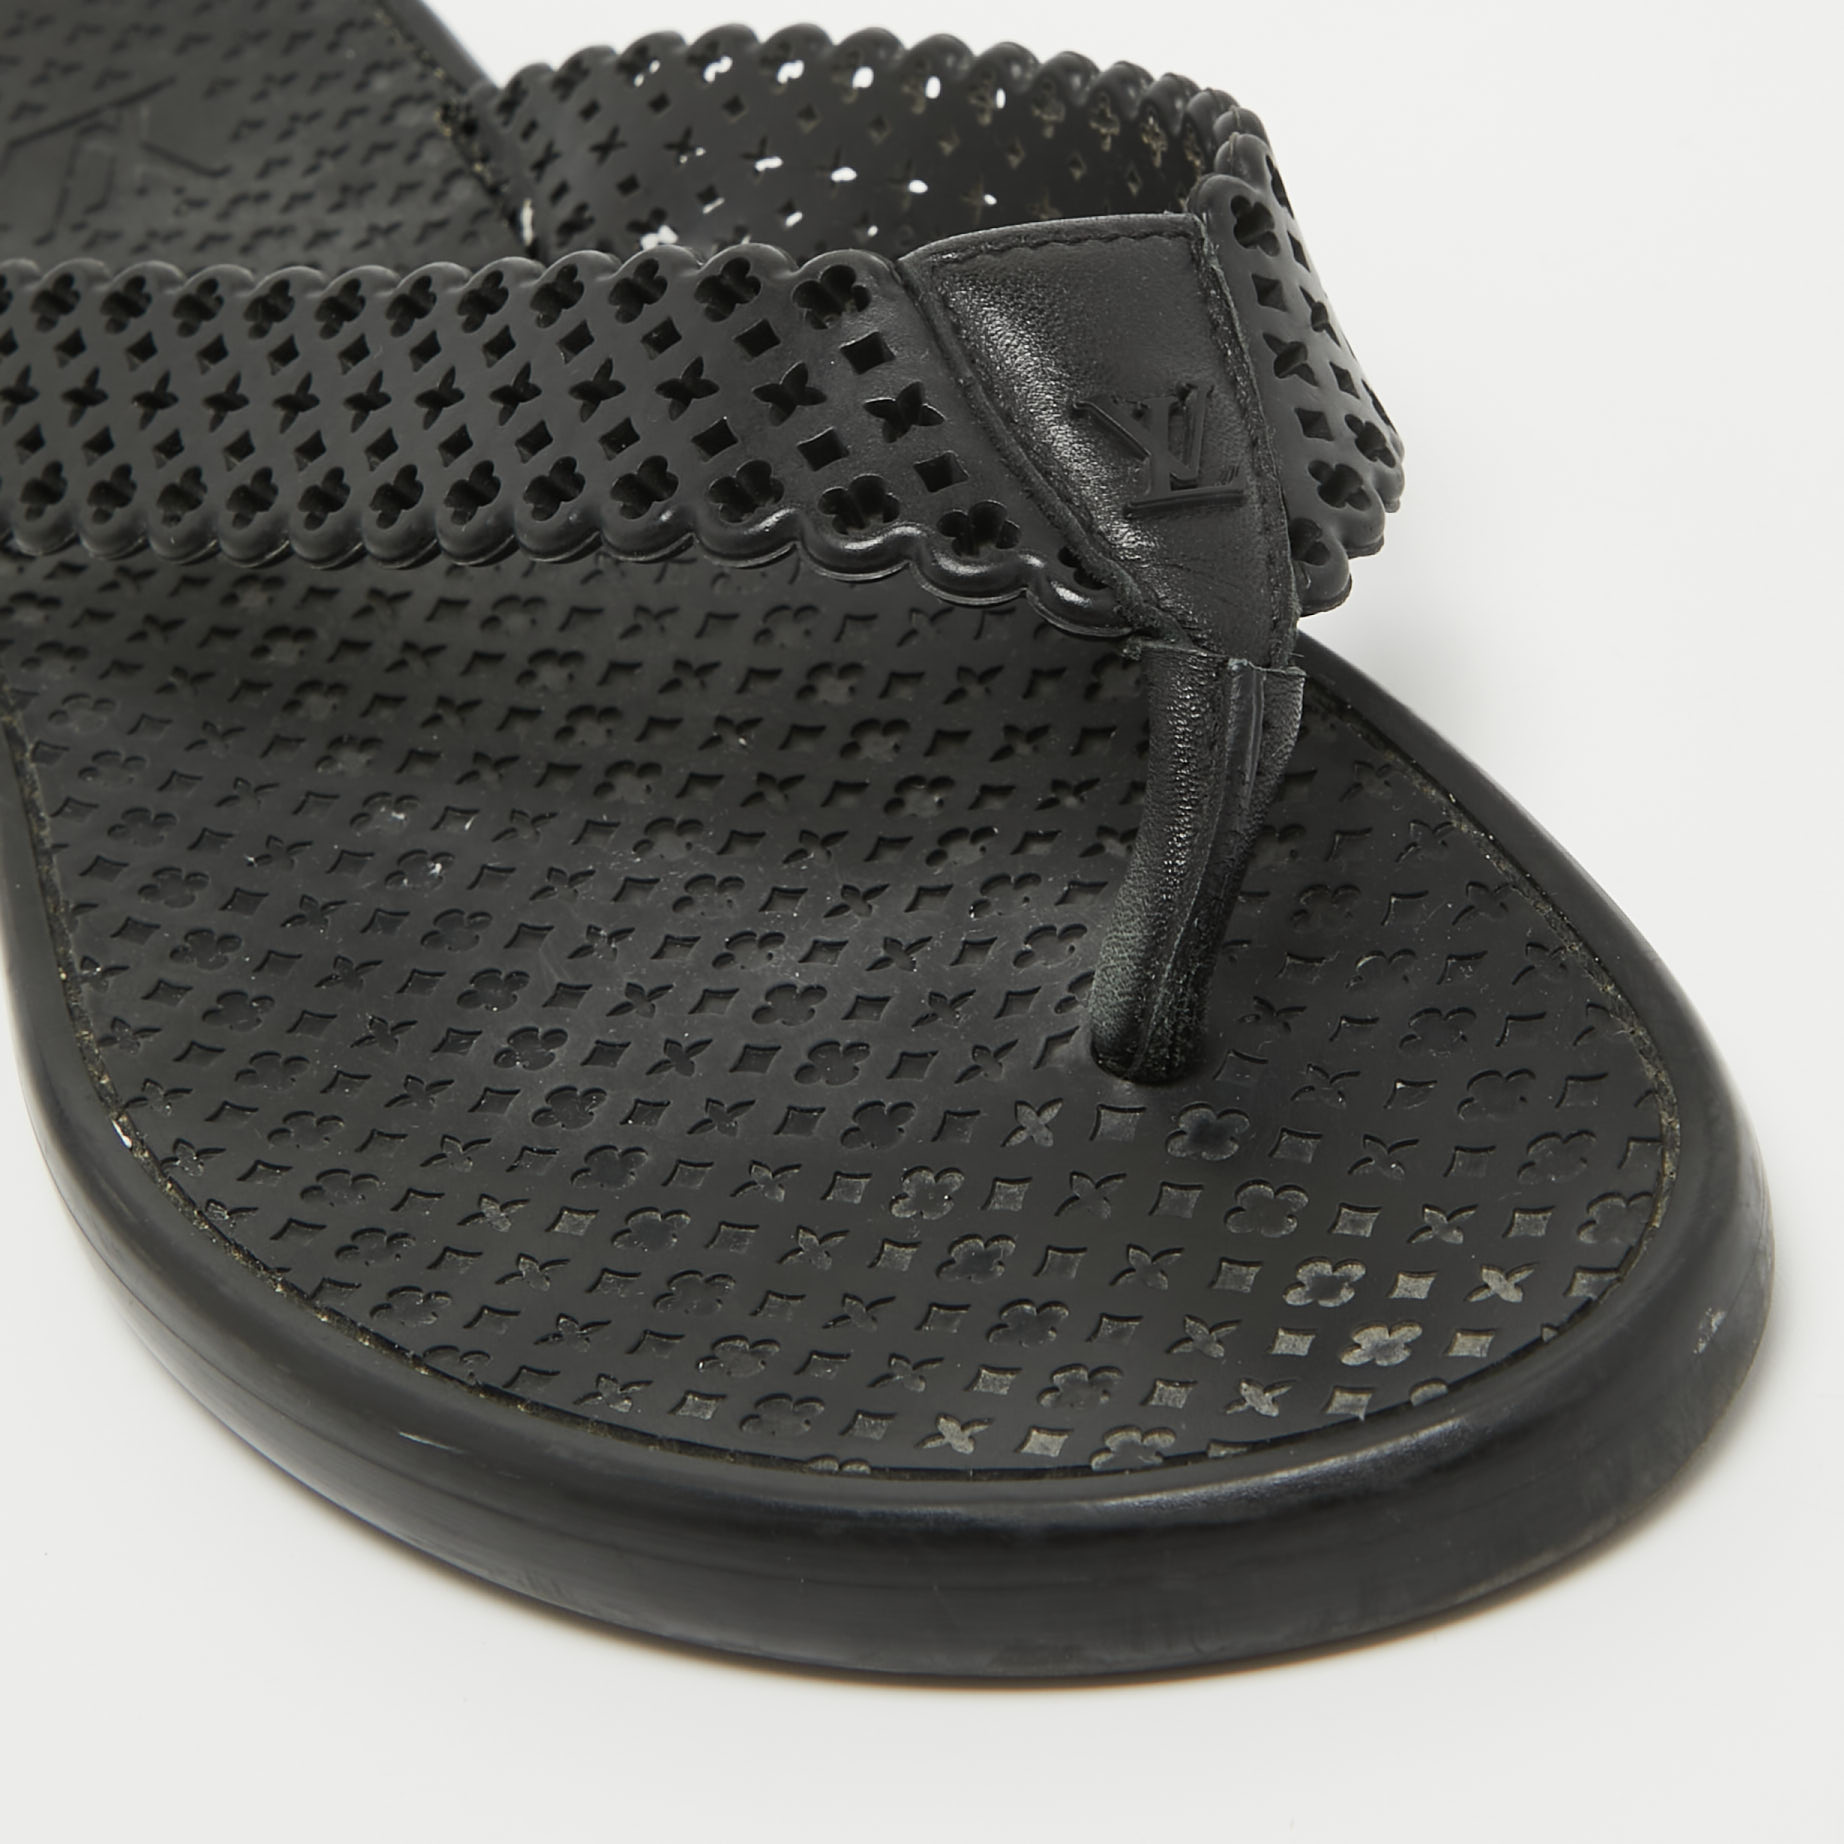 Louis Vuitton Black Leather Thong Flat Sandals Size 39.5